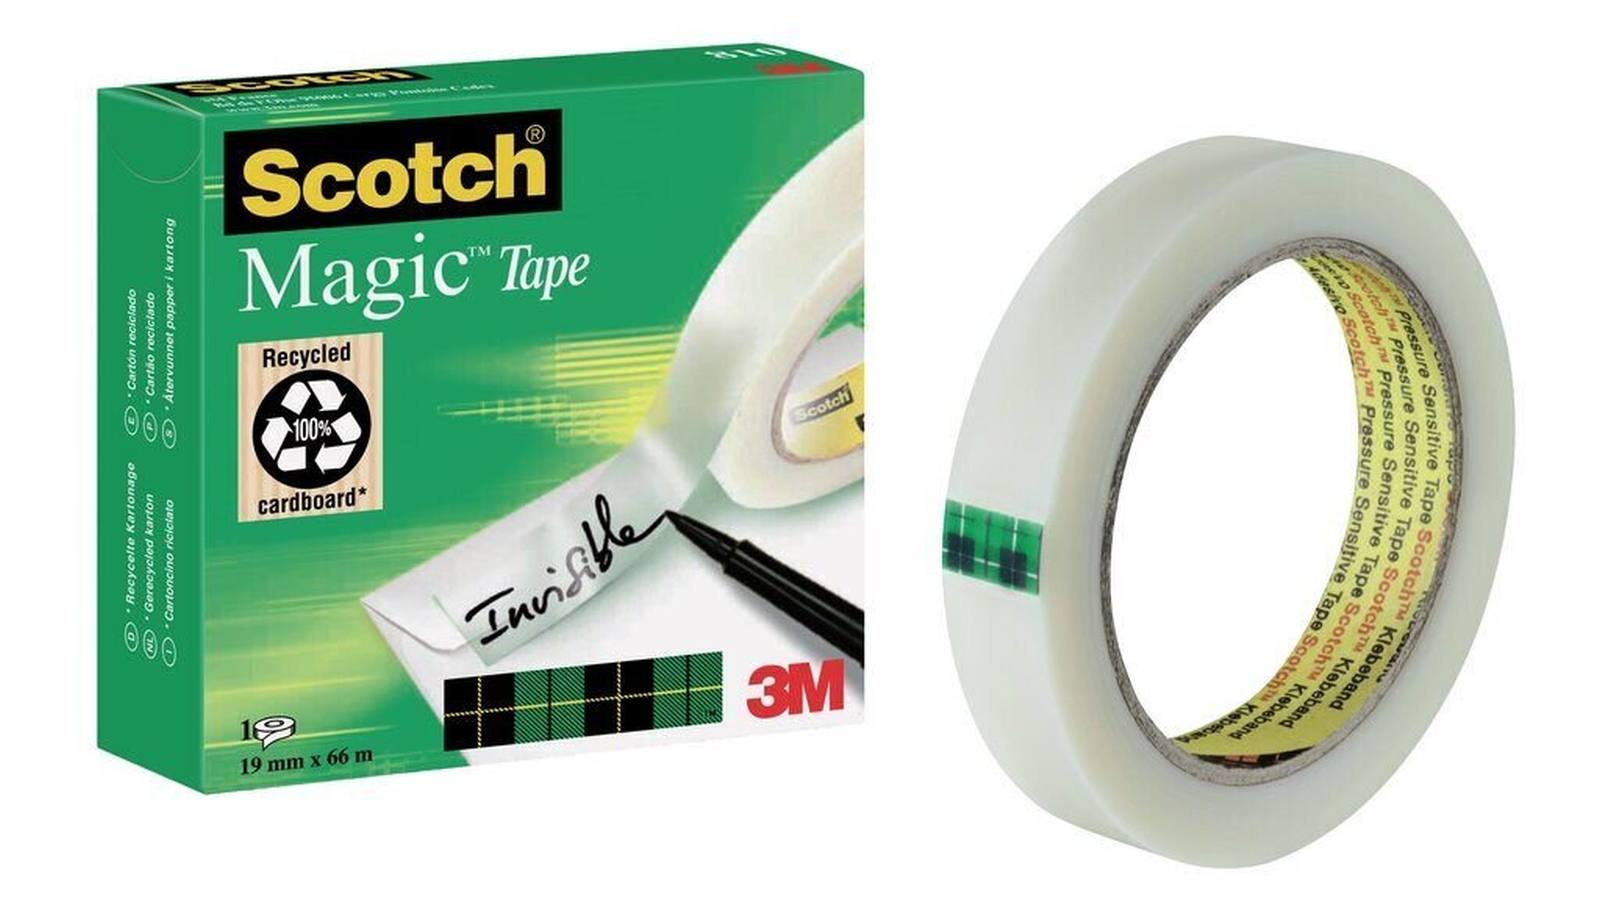 3M Scotch Magic adhesive tape 1 roll 19 mm x 66 m